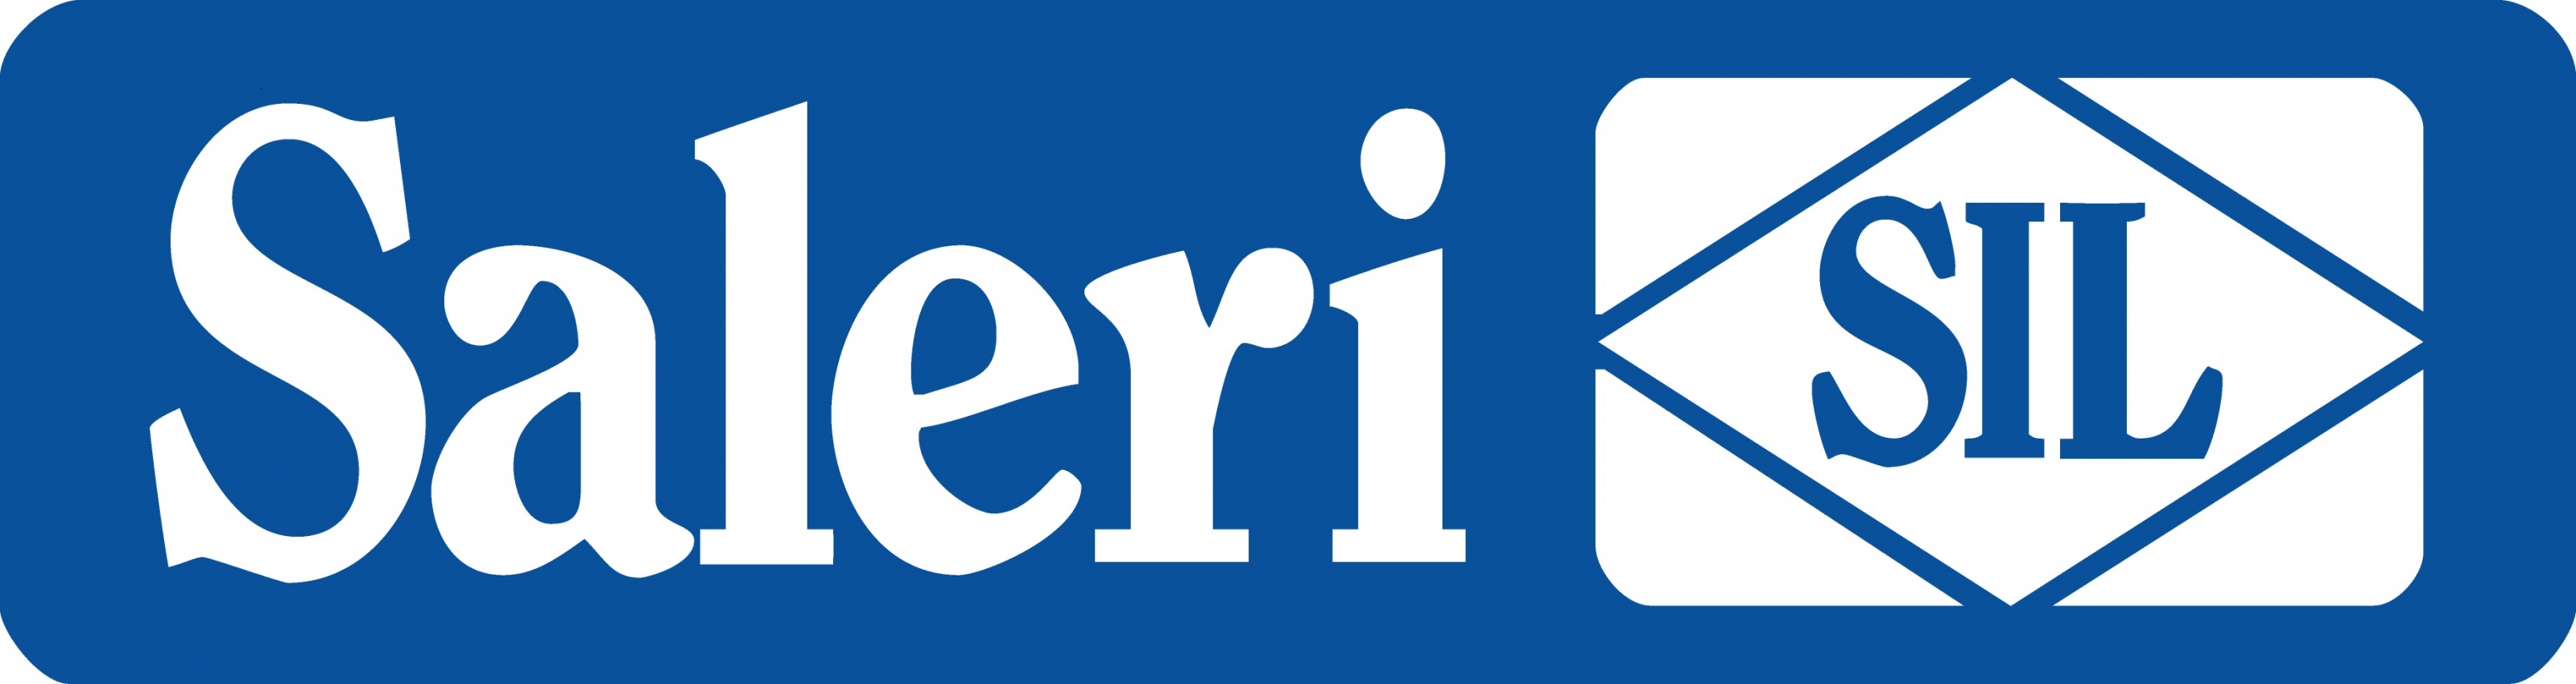 Логотип SALERI SIL